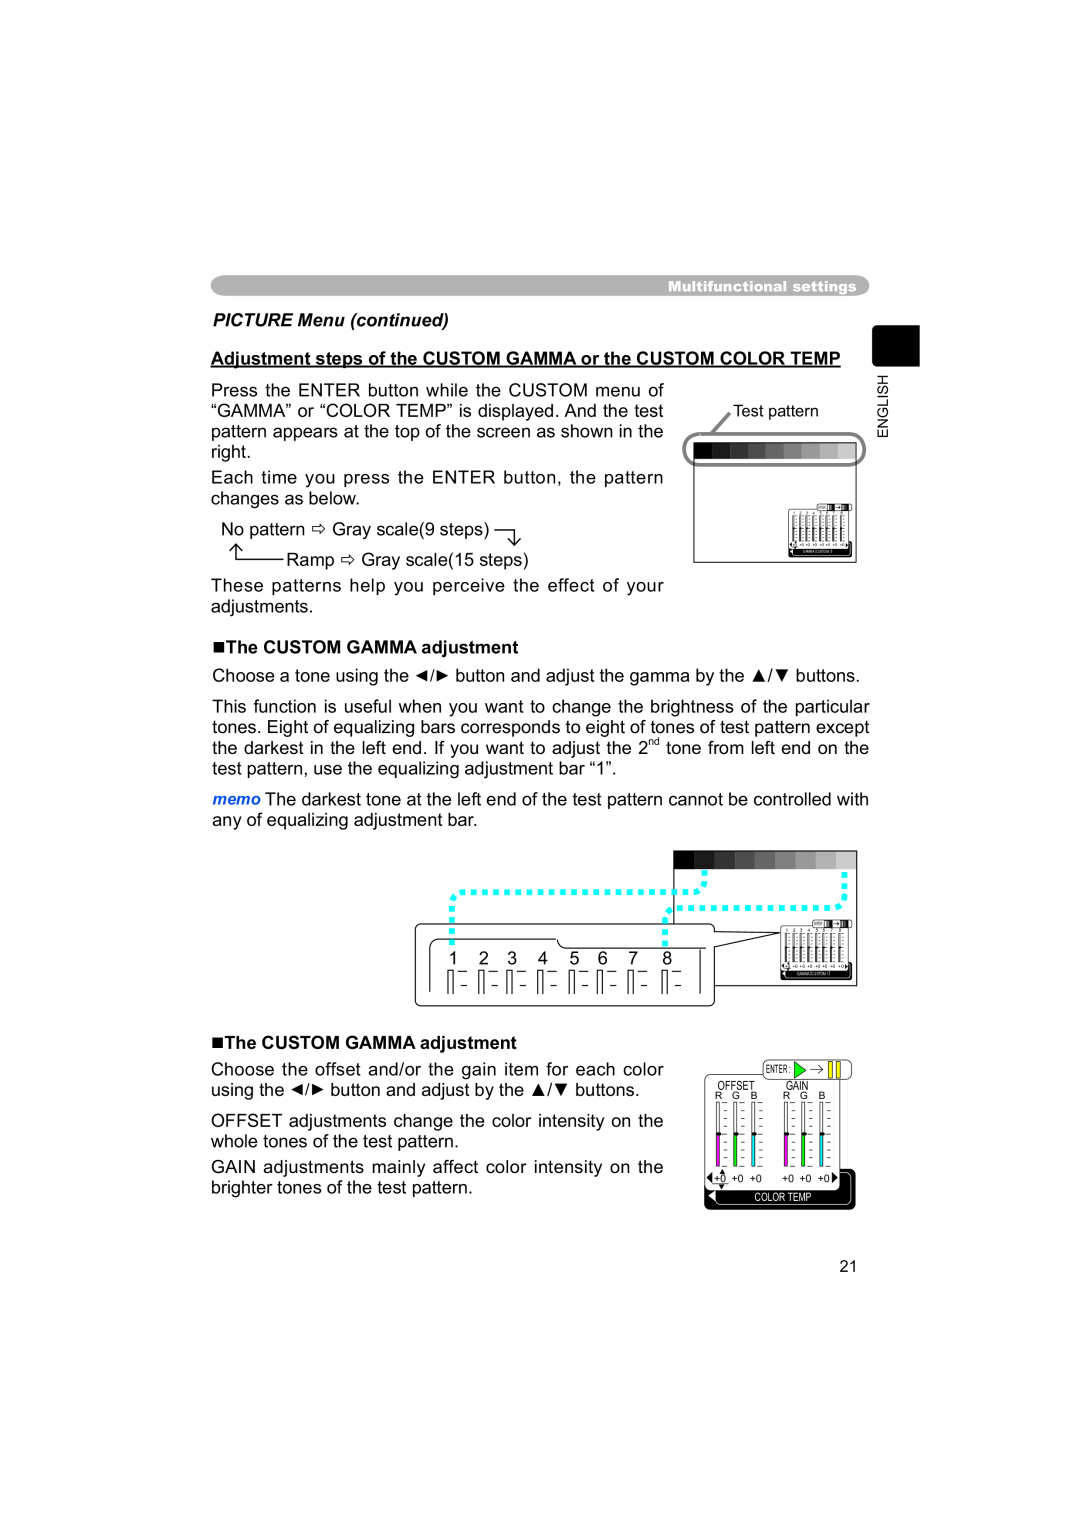 Hitachi PJ-TX100 user manual Adjustment steps of the CUSTOM GAMMA or the CUSTOM COLOR TEMP, The CUSTOM GAMMA adjustment 